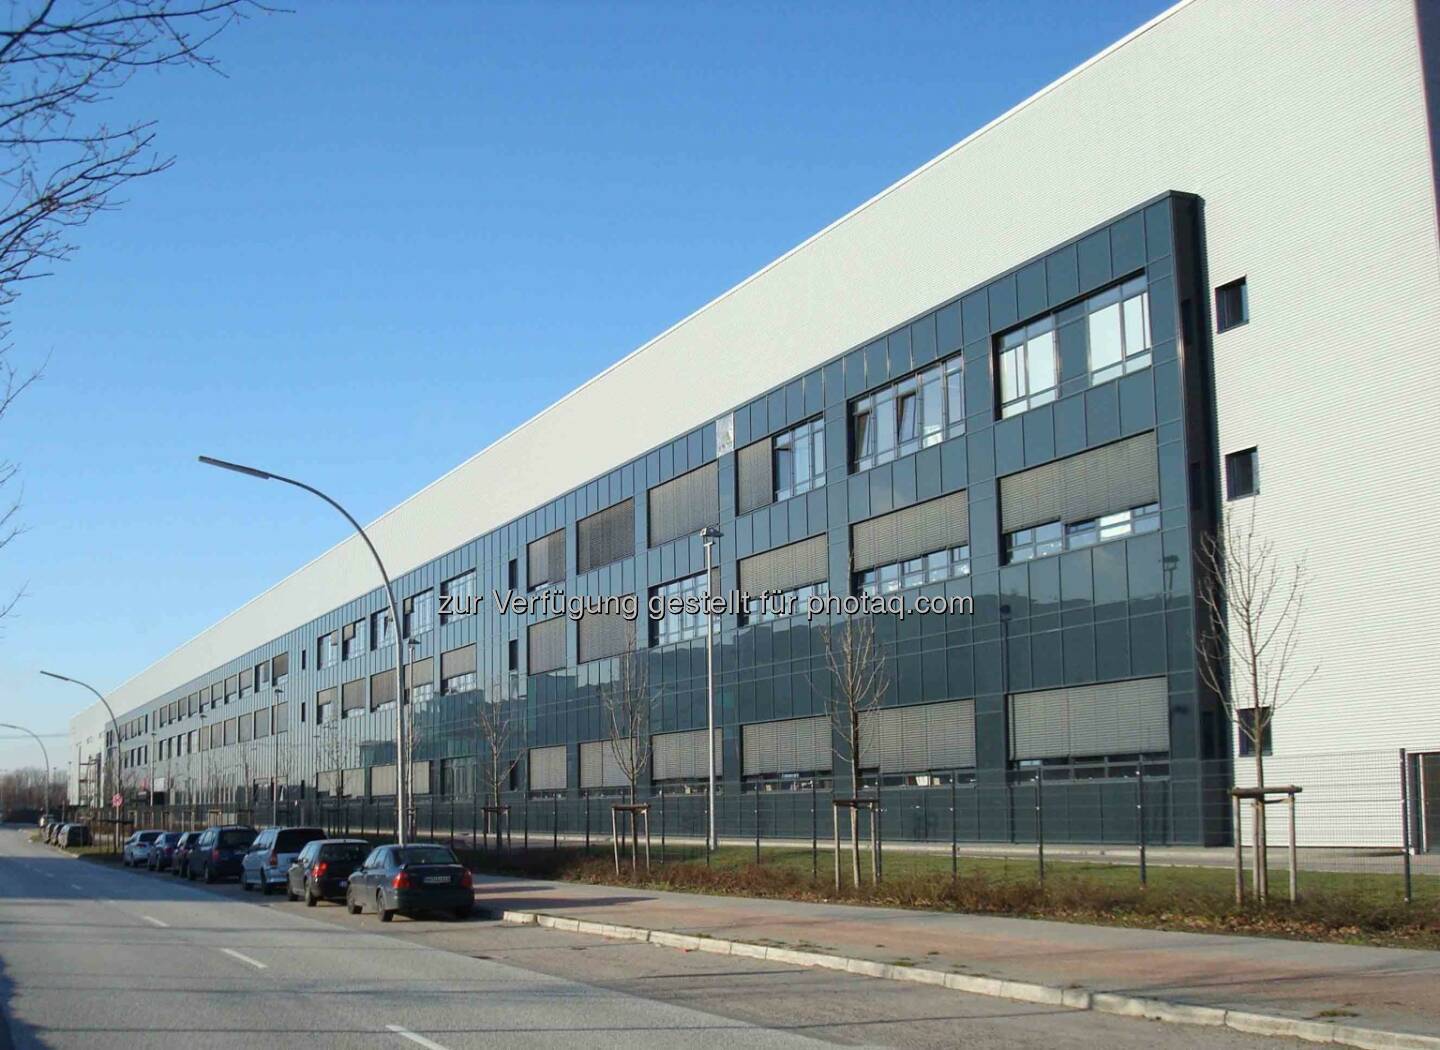 CA Immo verkauft H&M-Logistikzentrum in Hamburg.